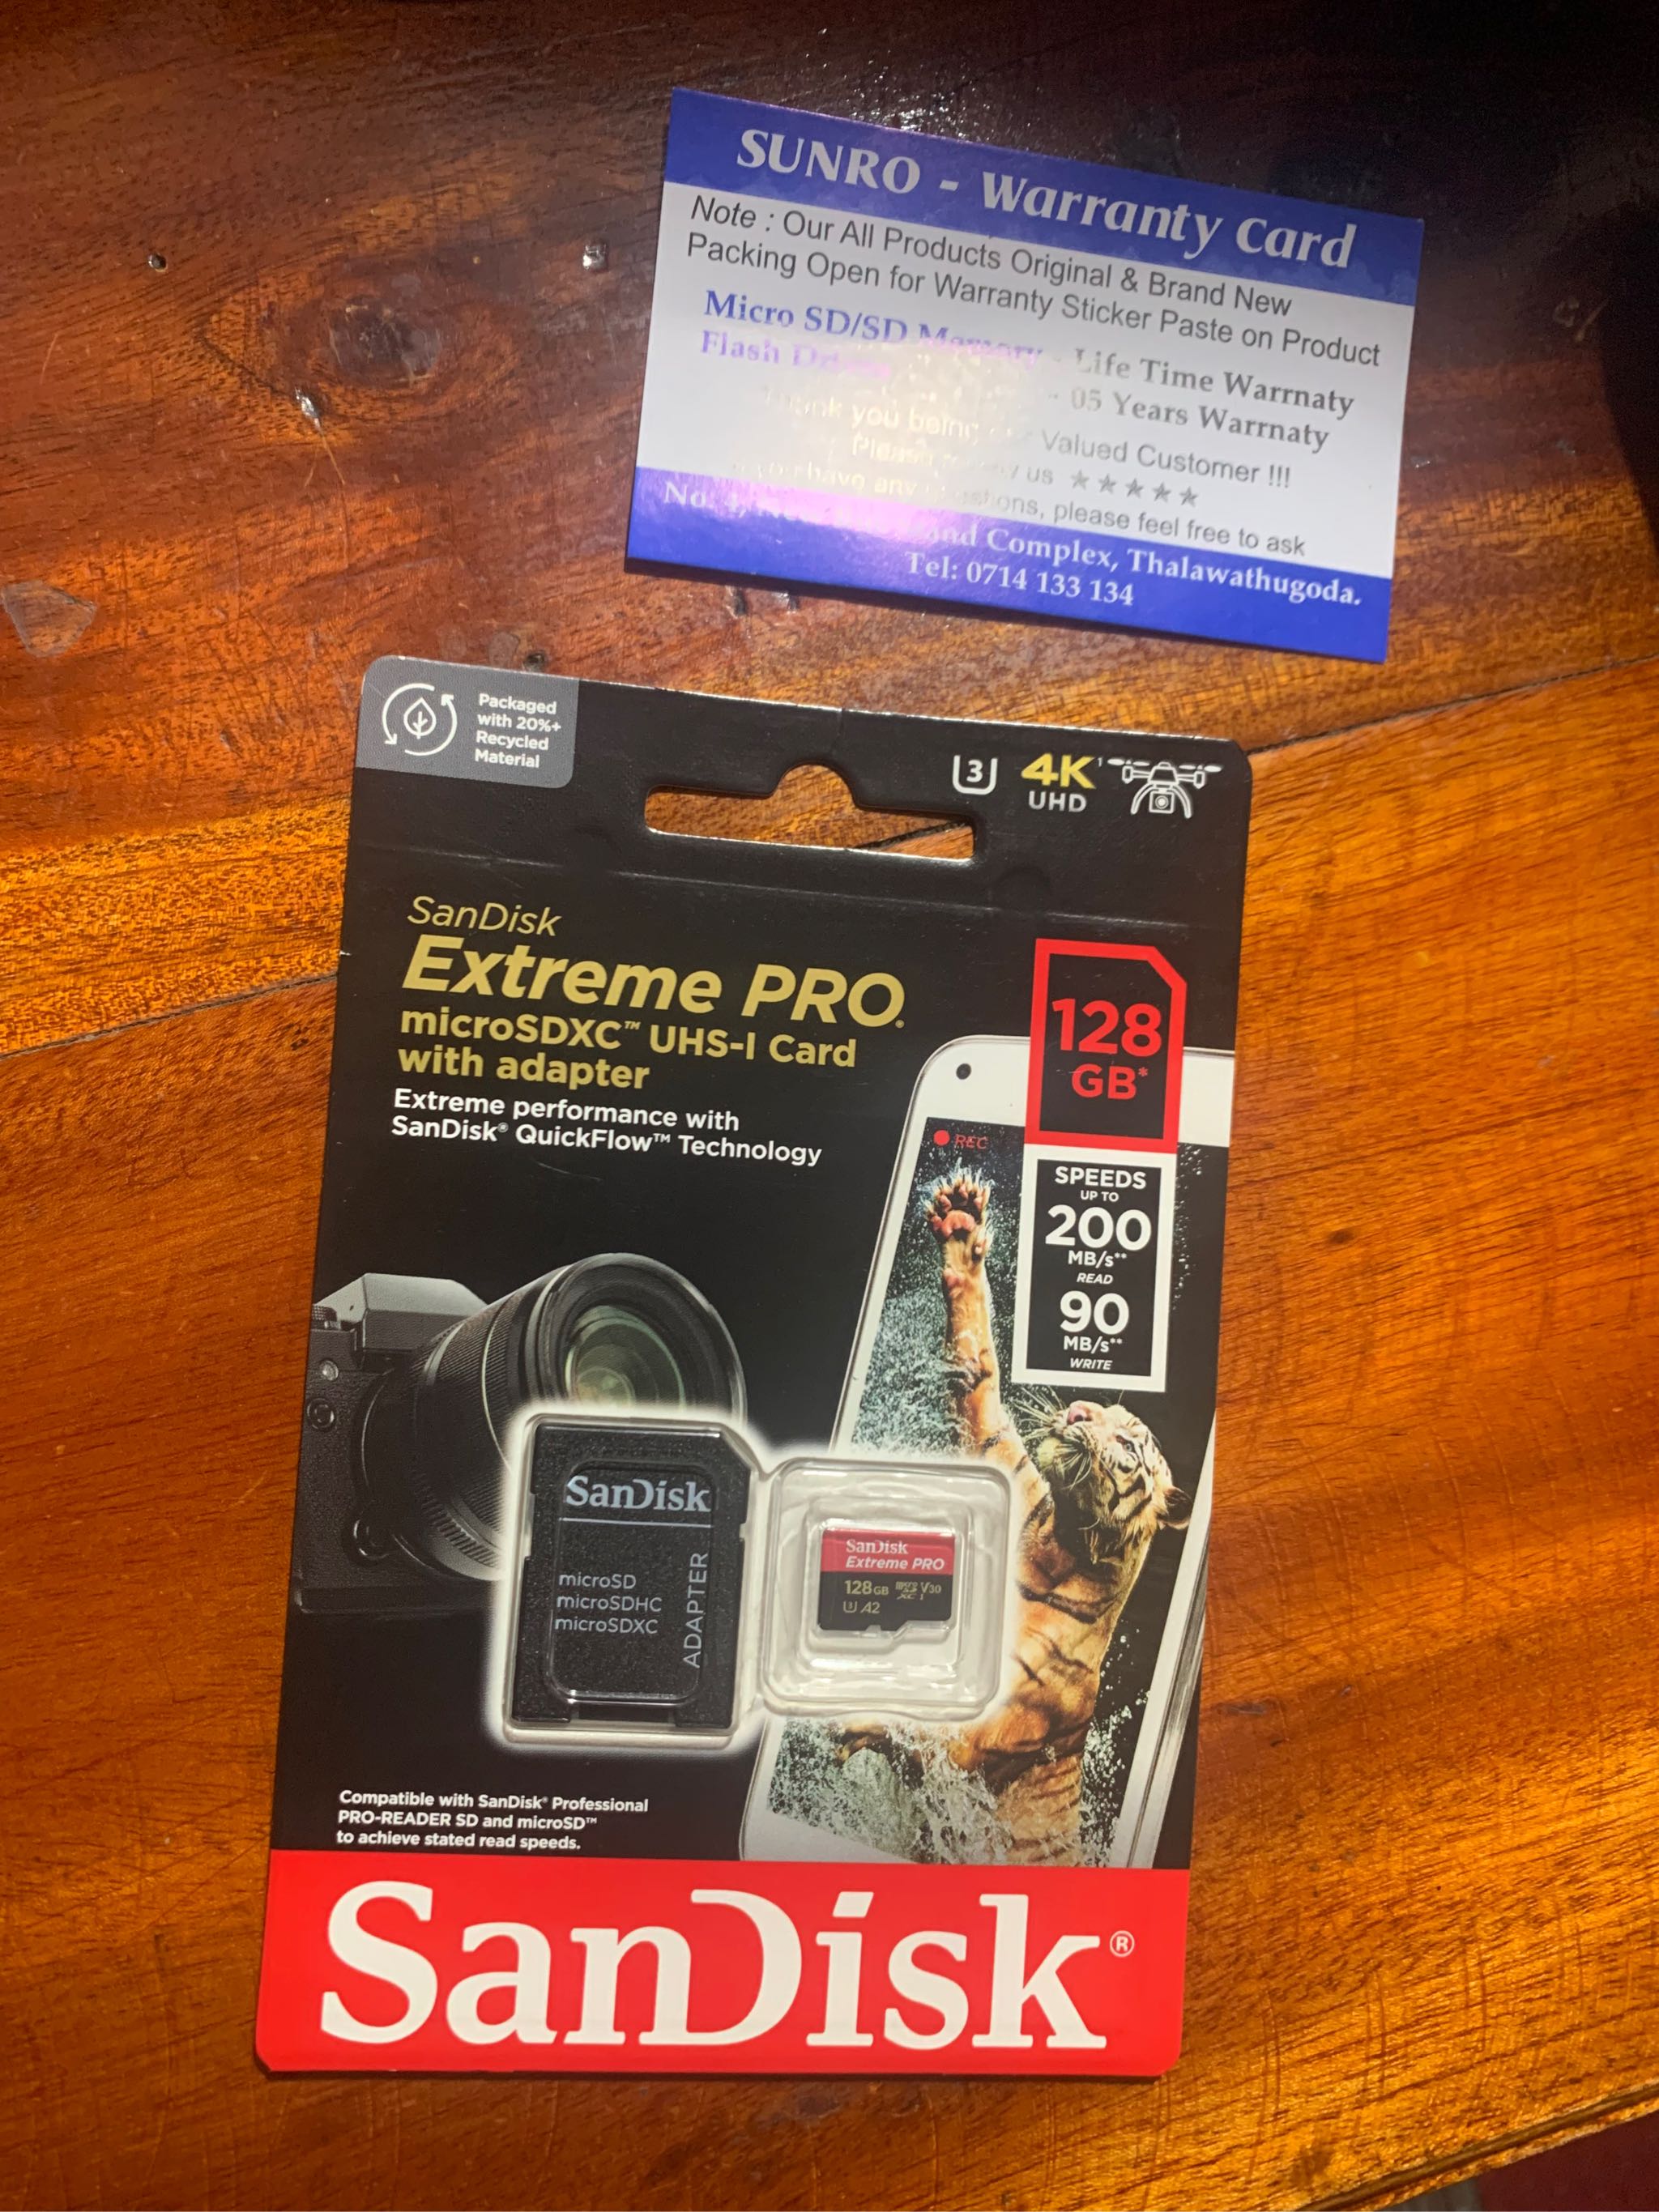 SanDisk Carte microSDXC Extreme PRO 64 GB